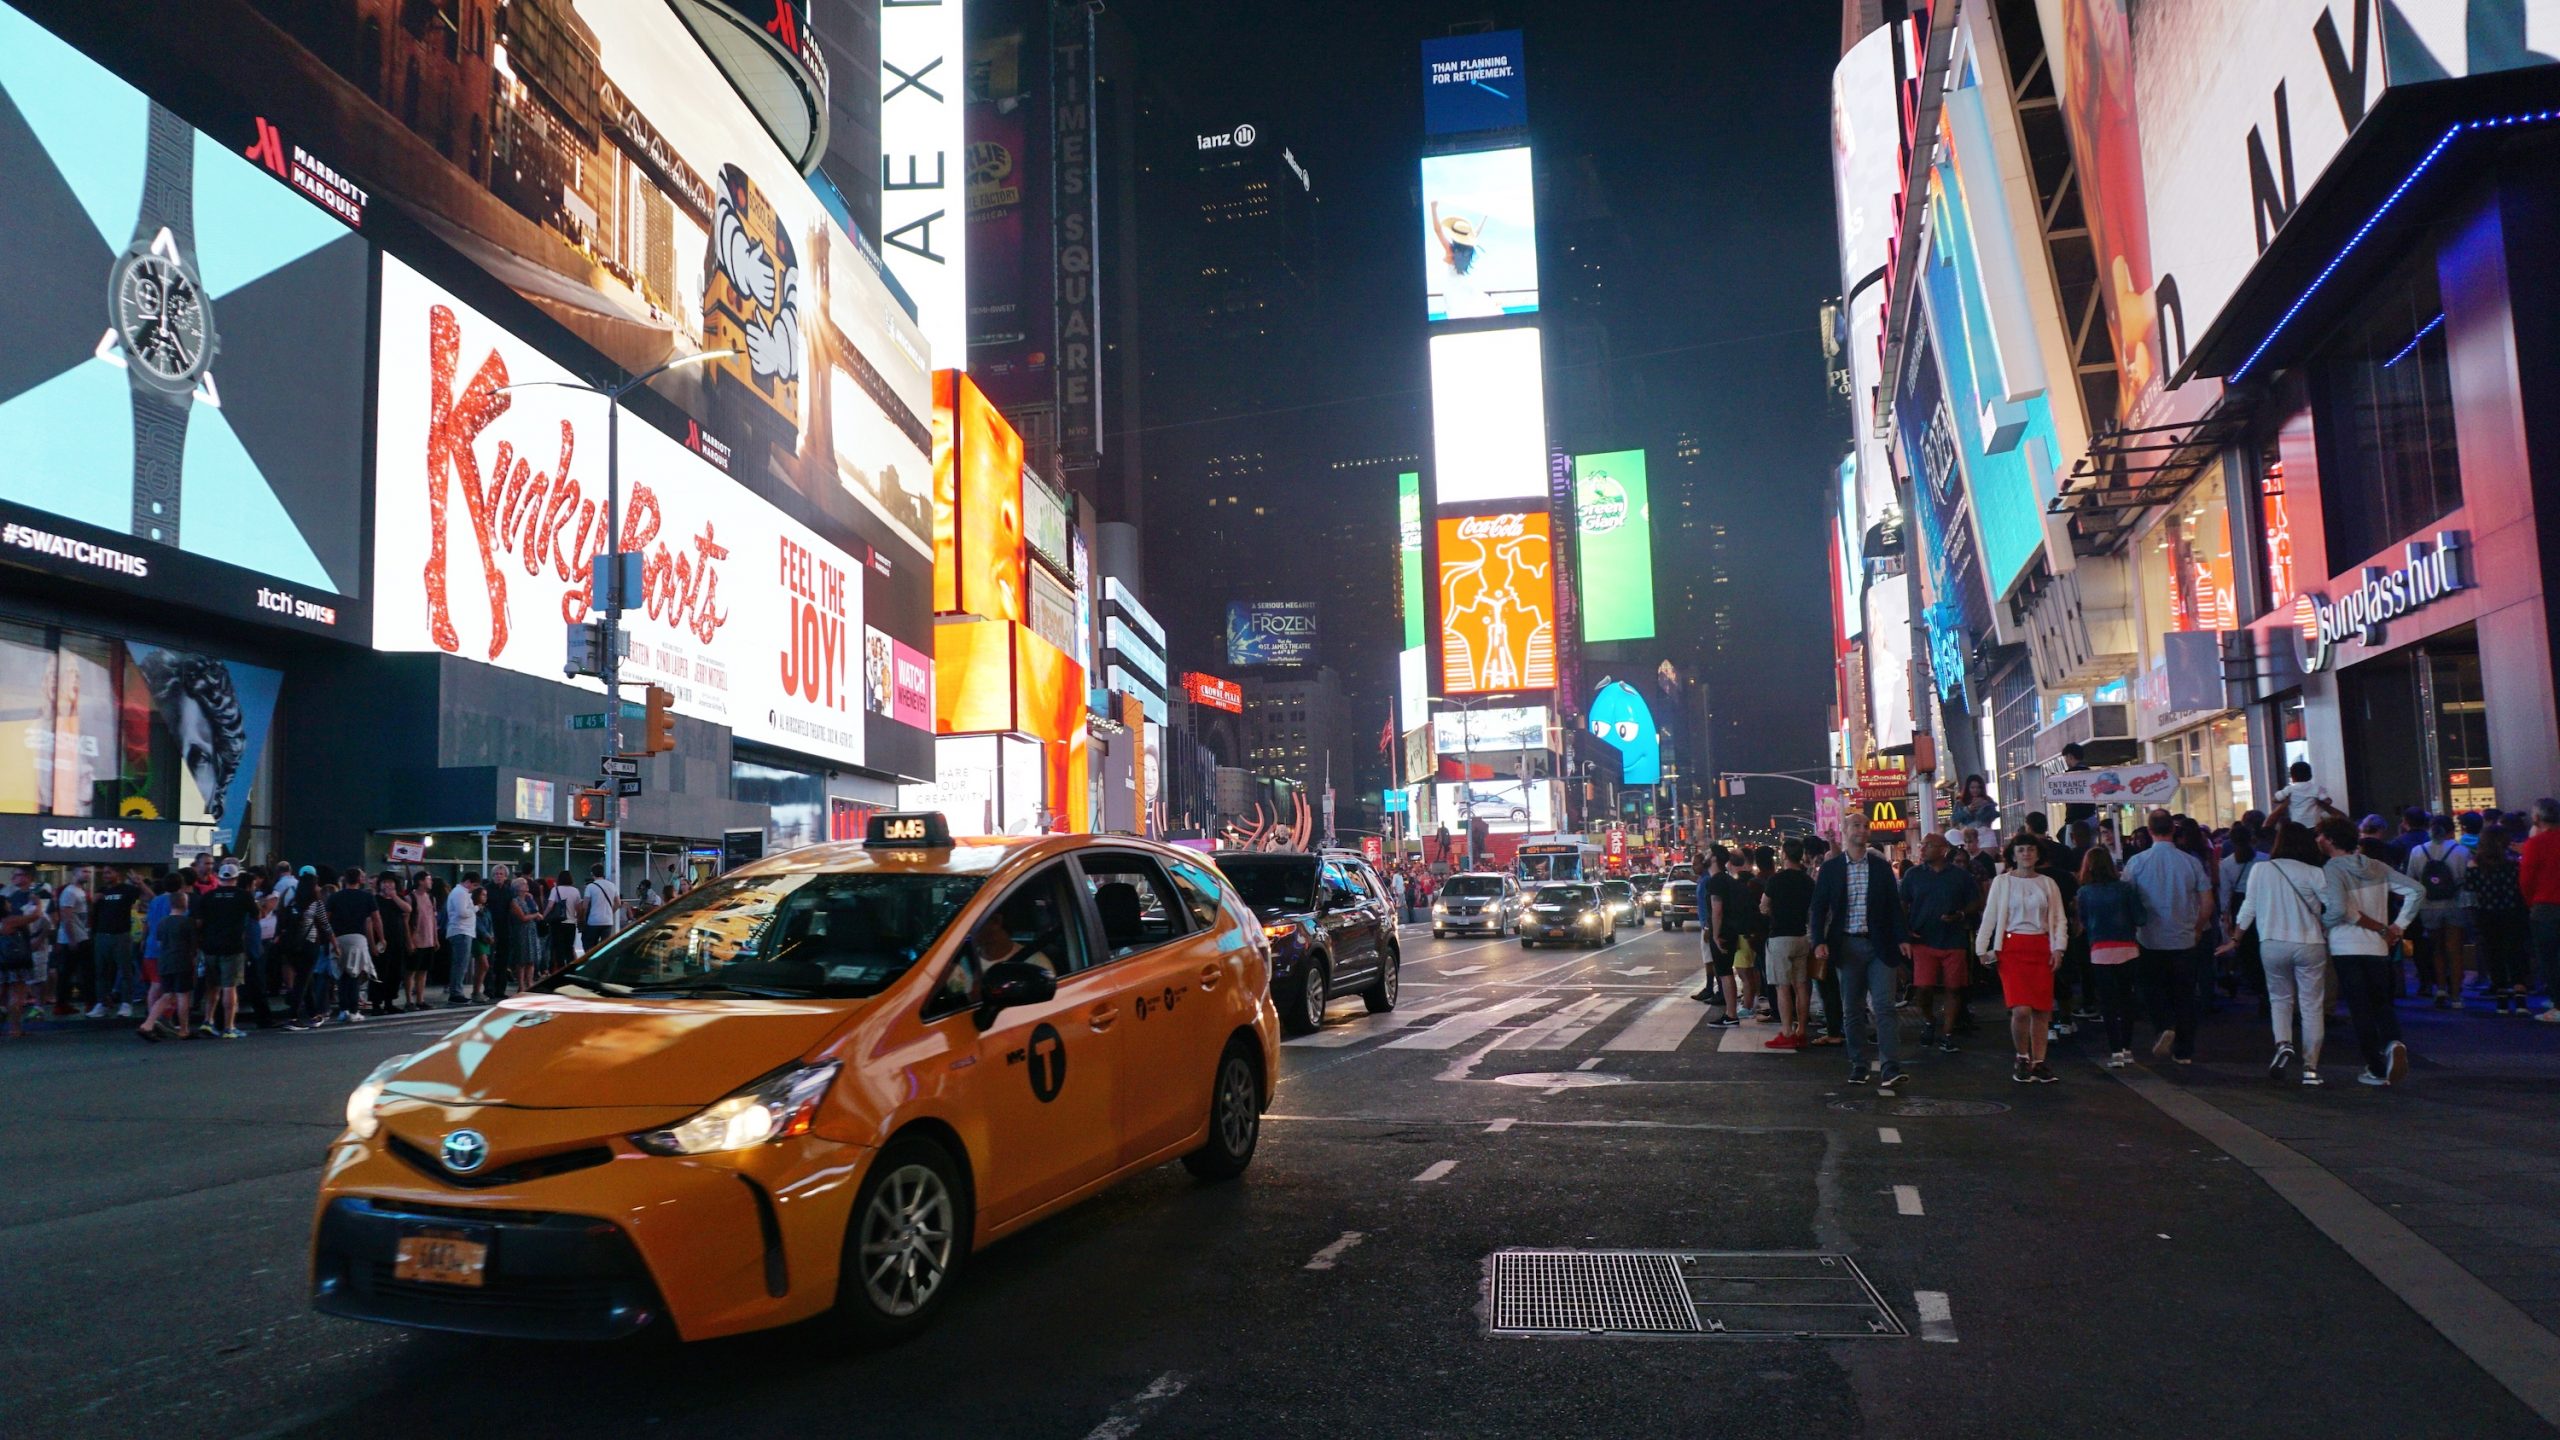 Times Square New York Nova Iorque New Year Travel Script Itinerary Map Girl smilling blog viagens roteiros itinerários World to explore